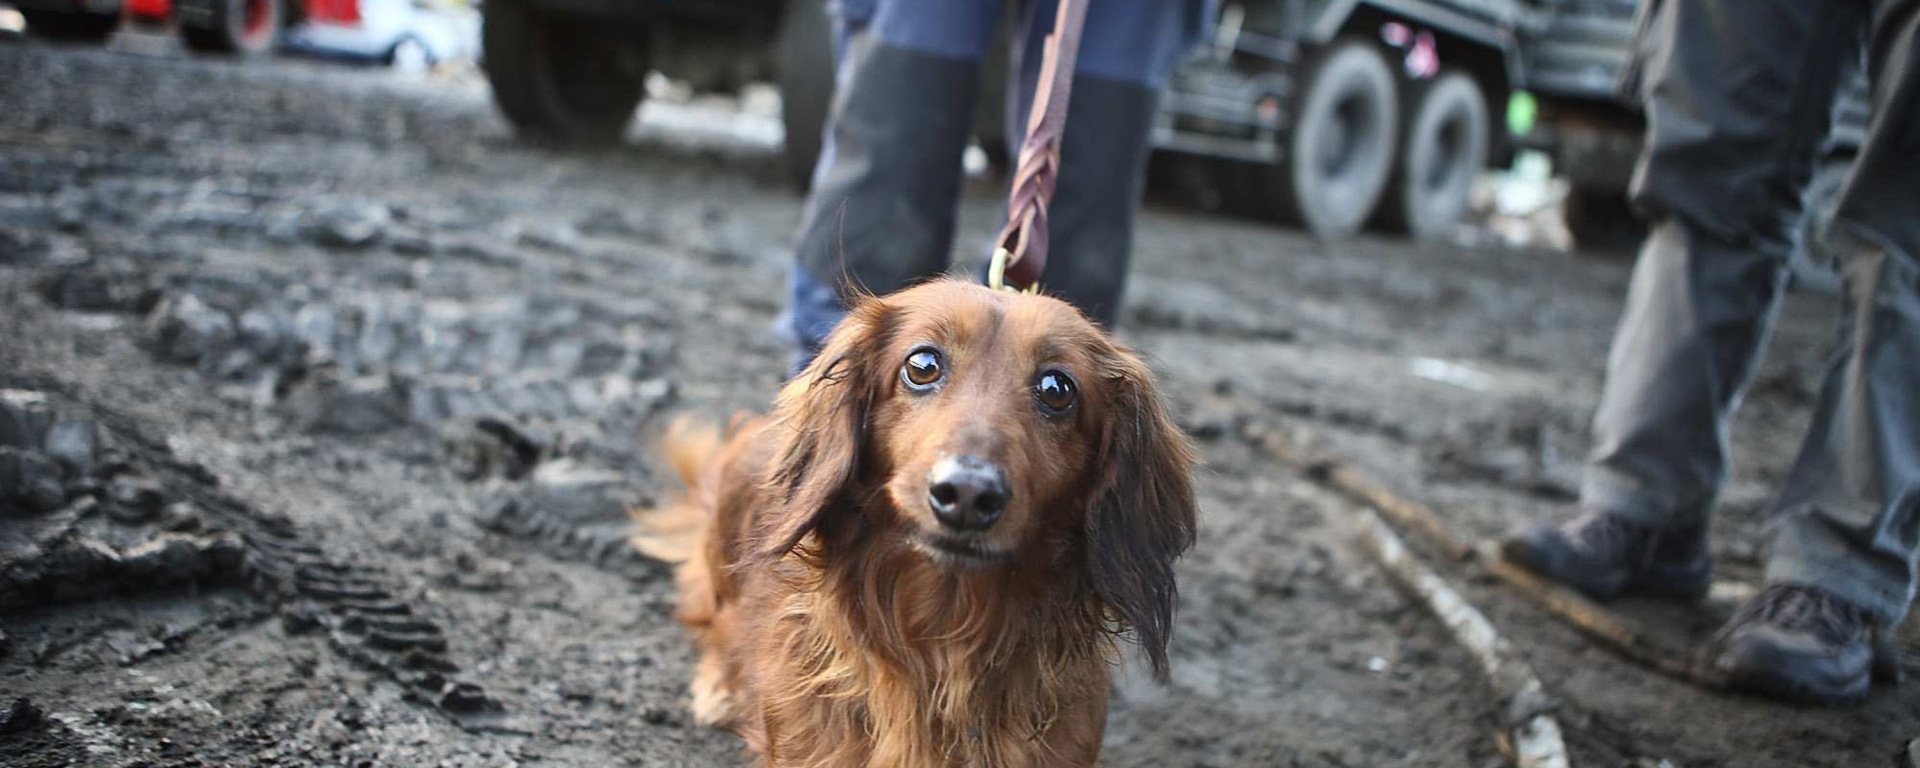 Dog after earthquake